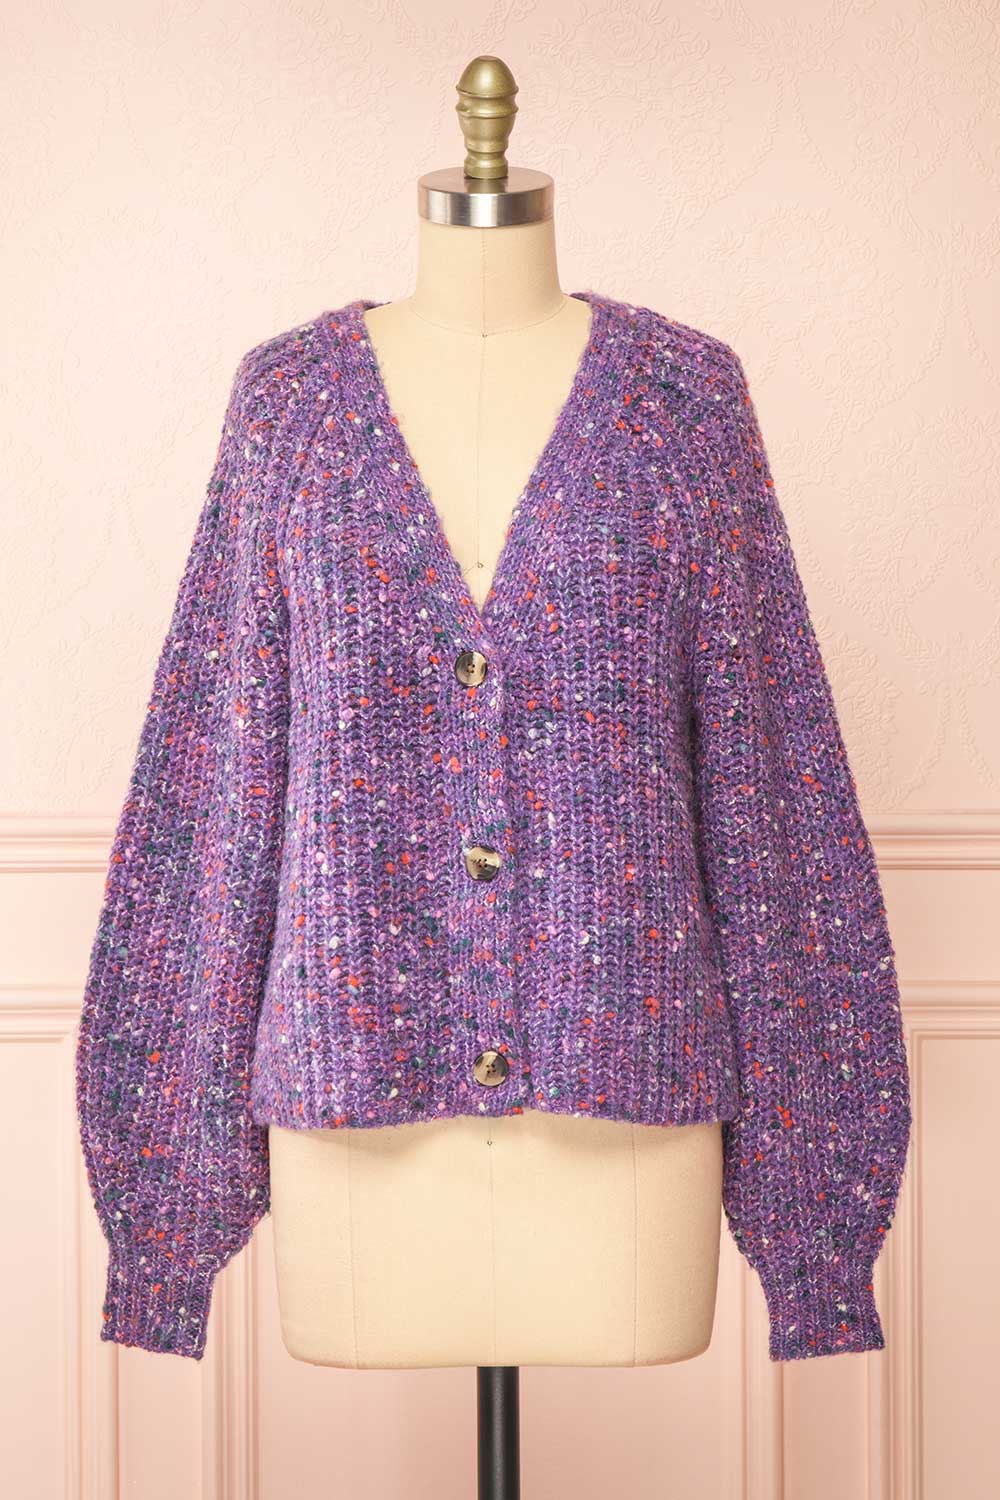 Manue Purple Cardigan w/ Multicoloured Speckles | Boutique 1861 front view